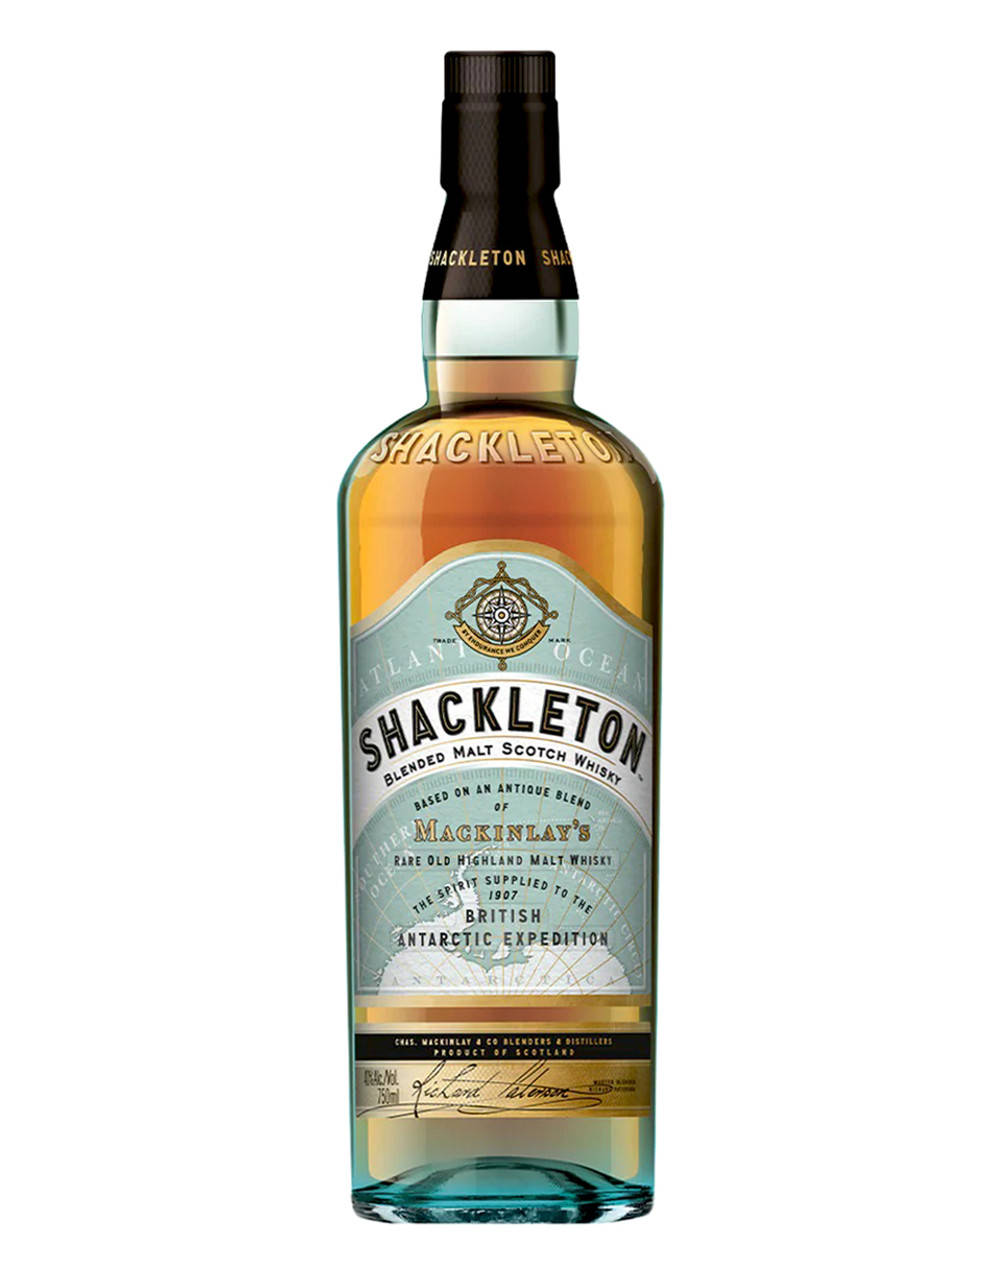 Shackletonwhisky Flasche Werbeaufnahme Wallpaper